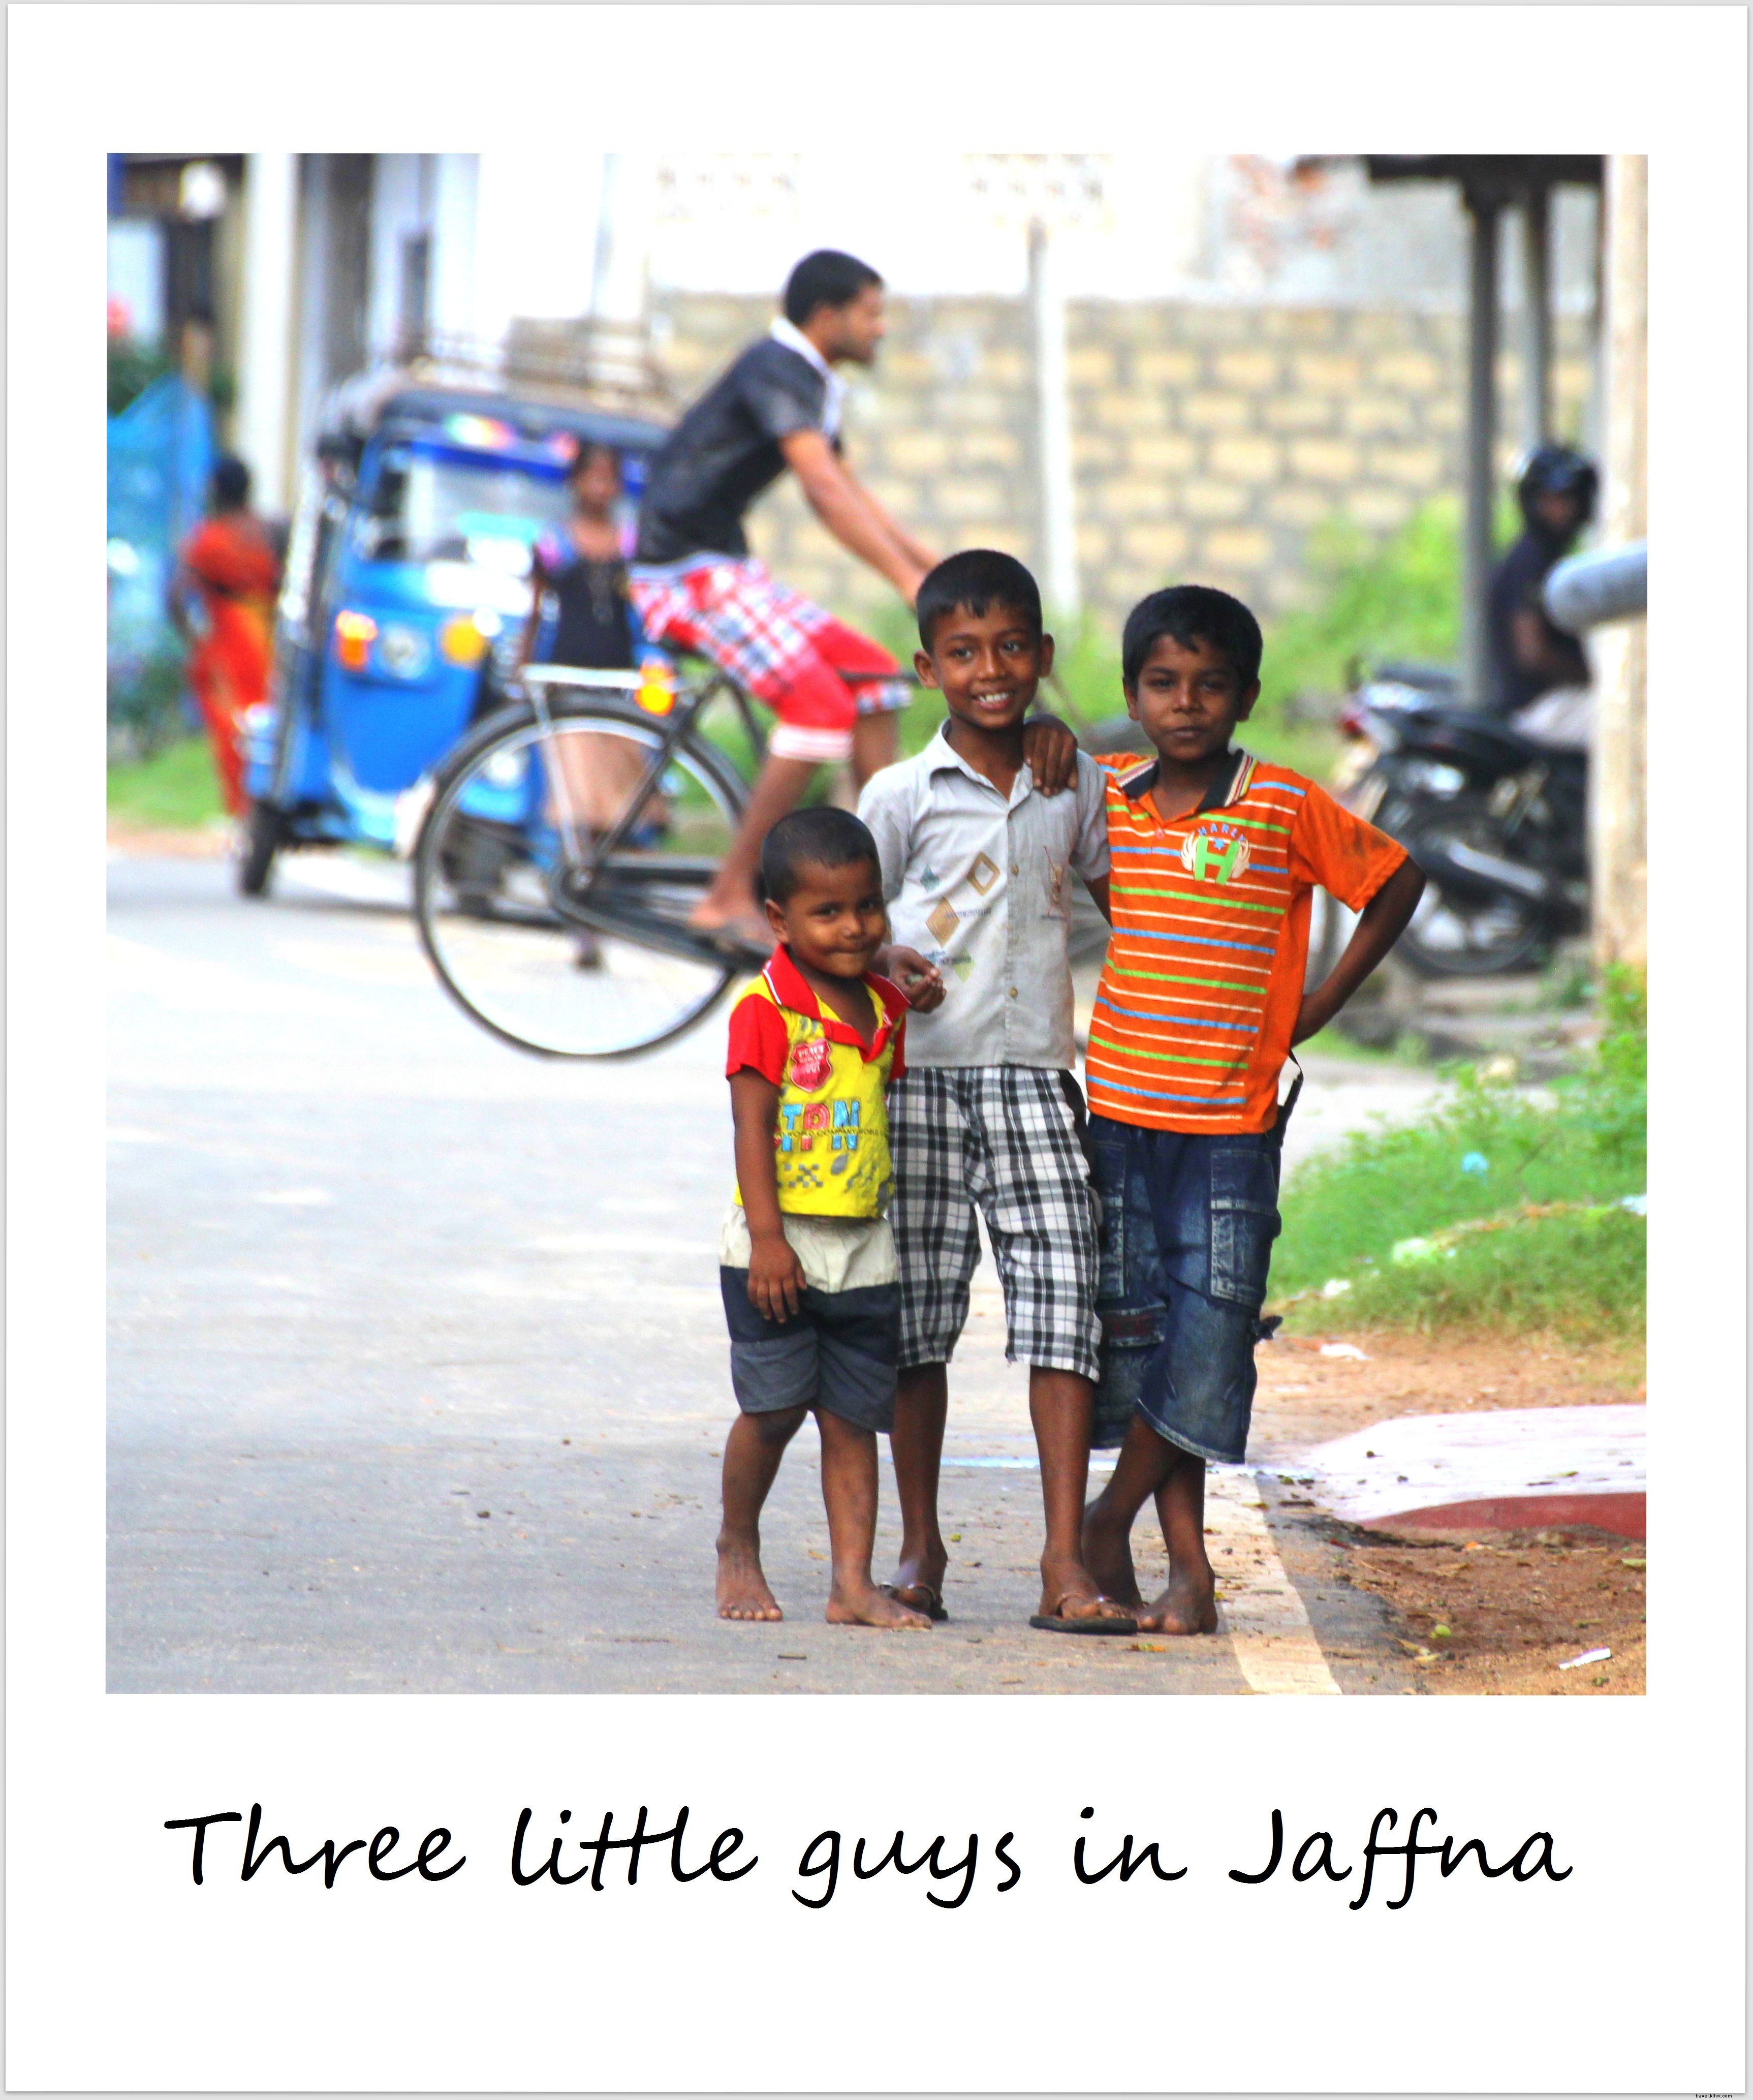 Polaroid minggu ini:Anak laki-laki Jaffna